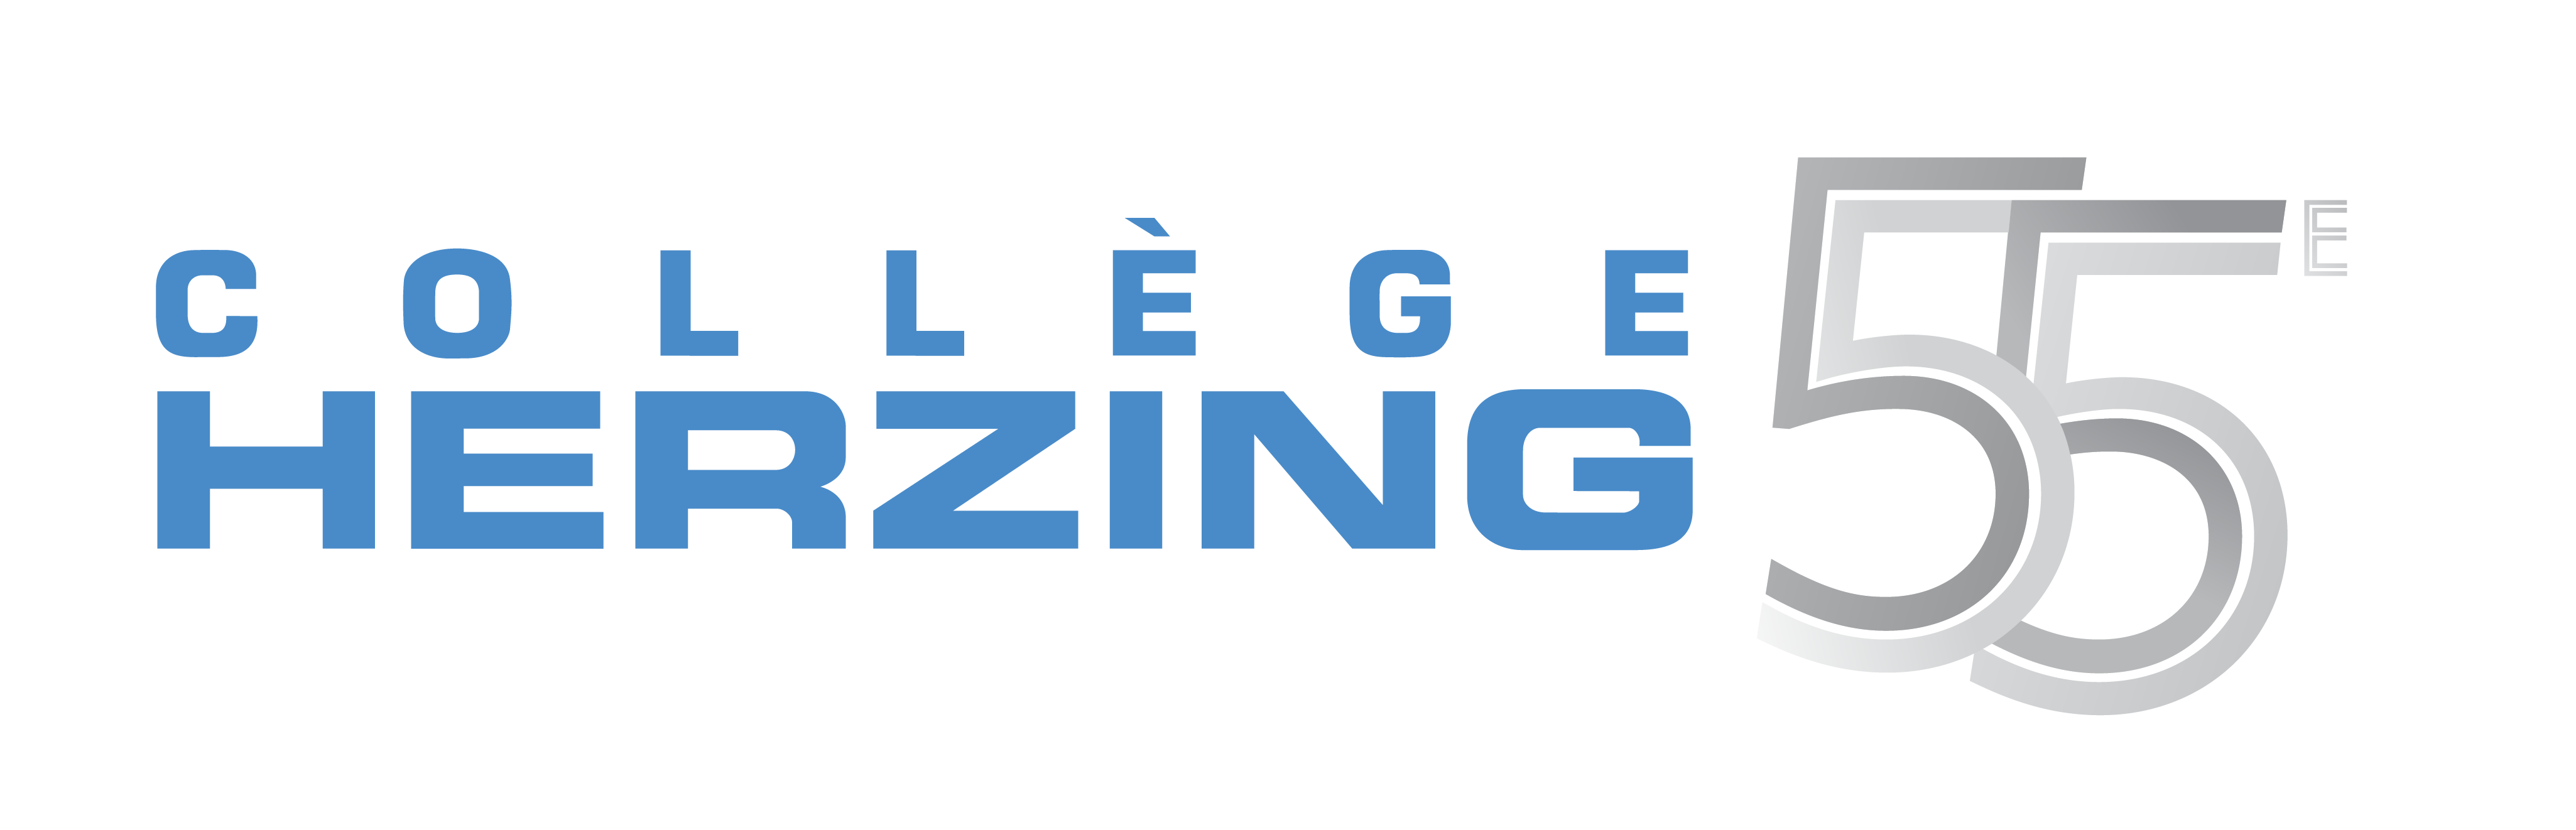 Herzing 55 Logo FR